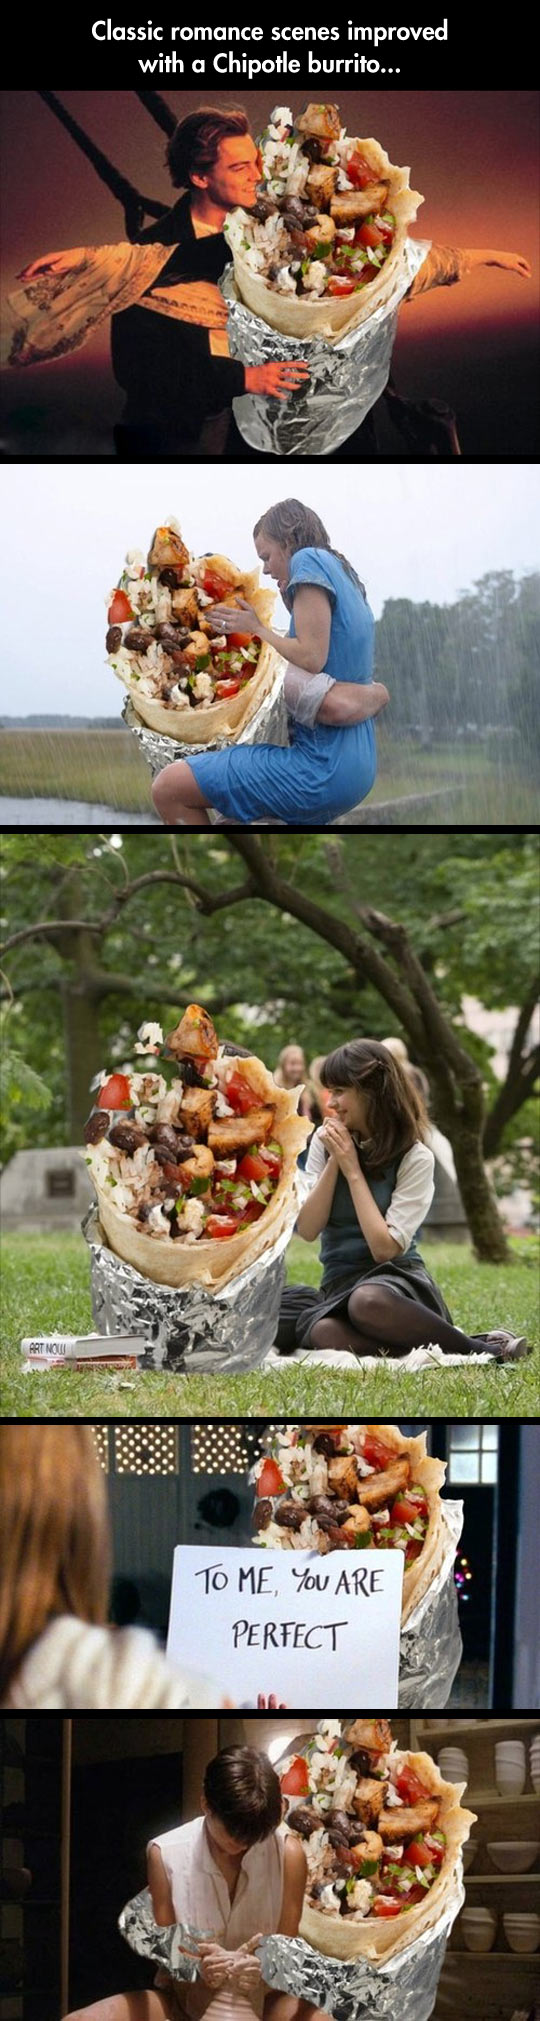 Burrito Romance